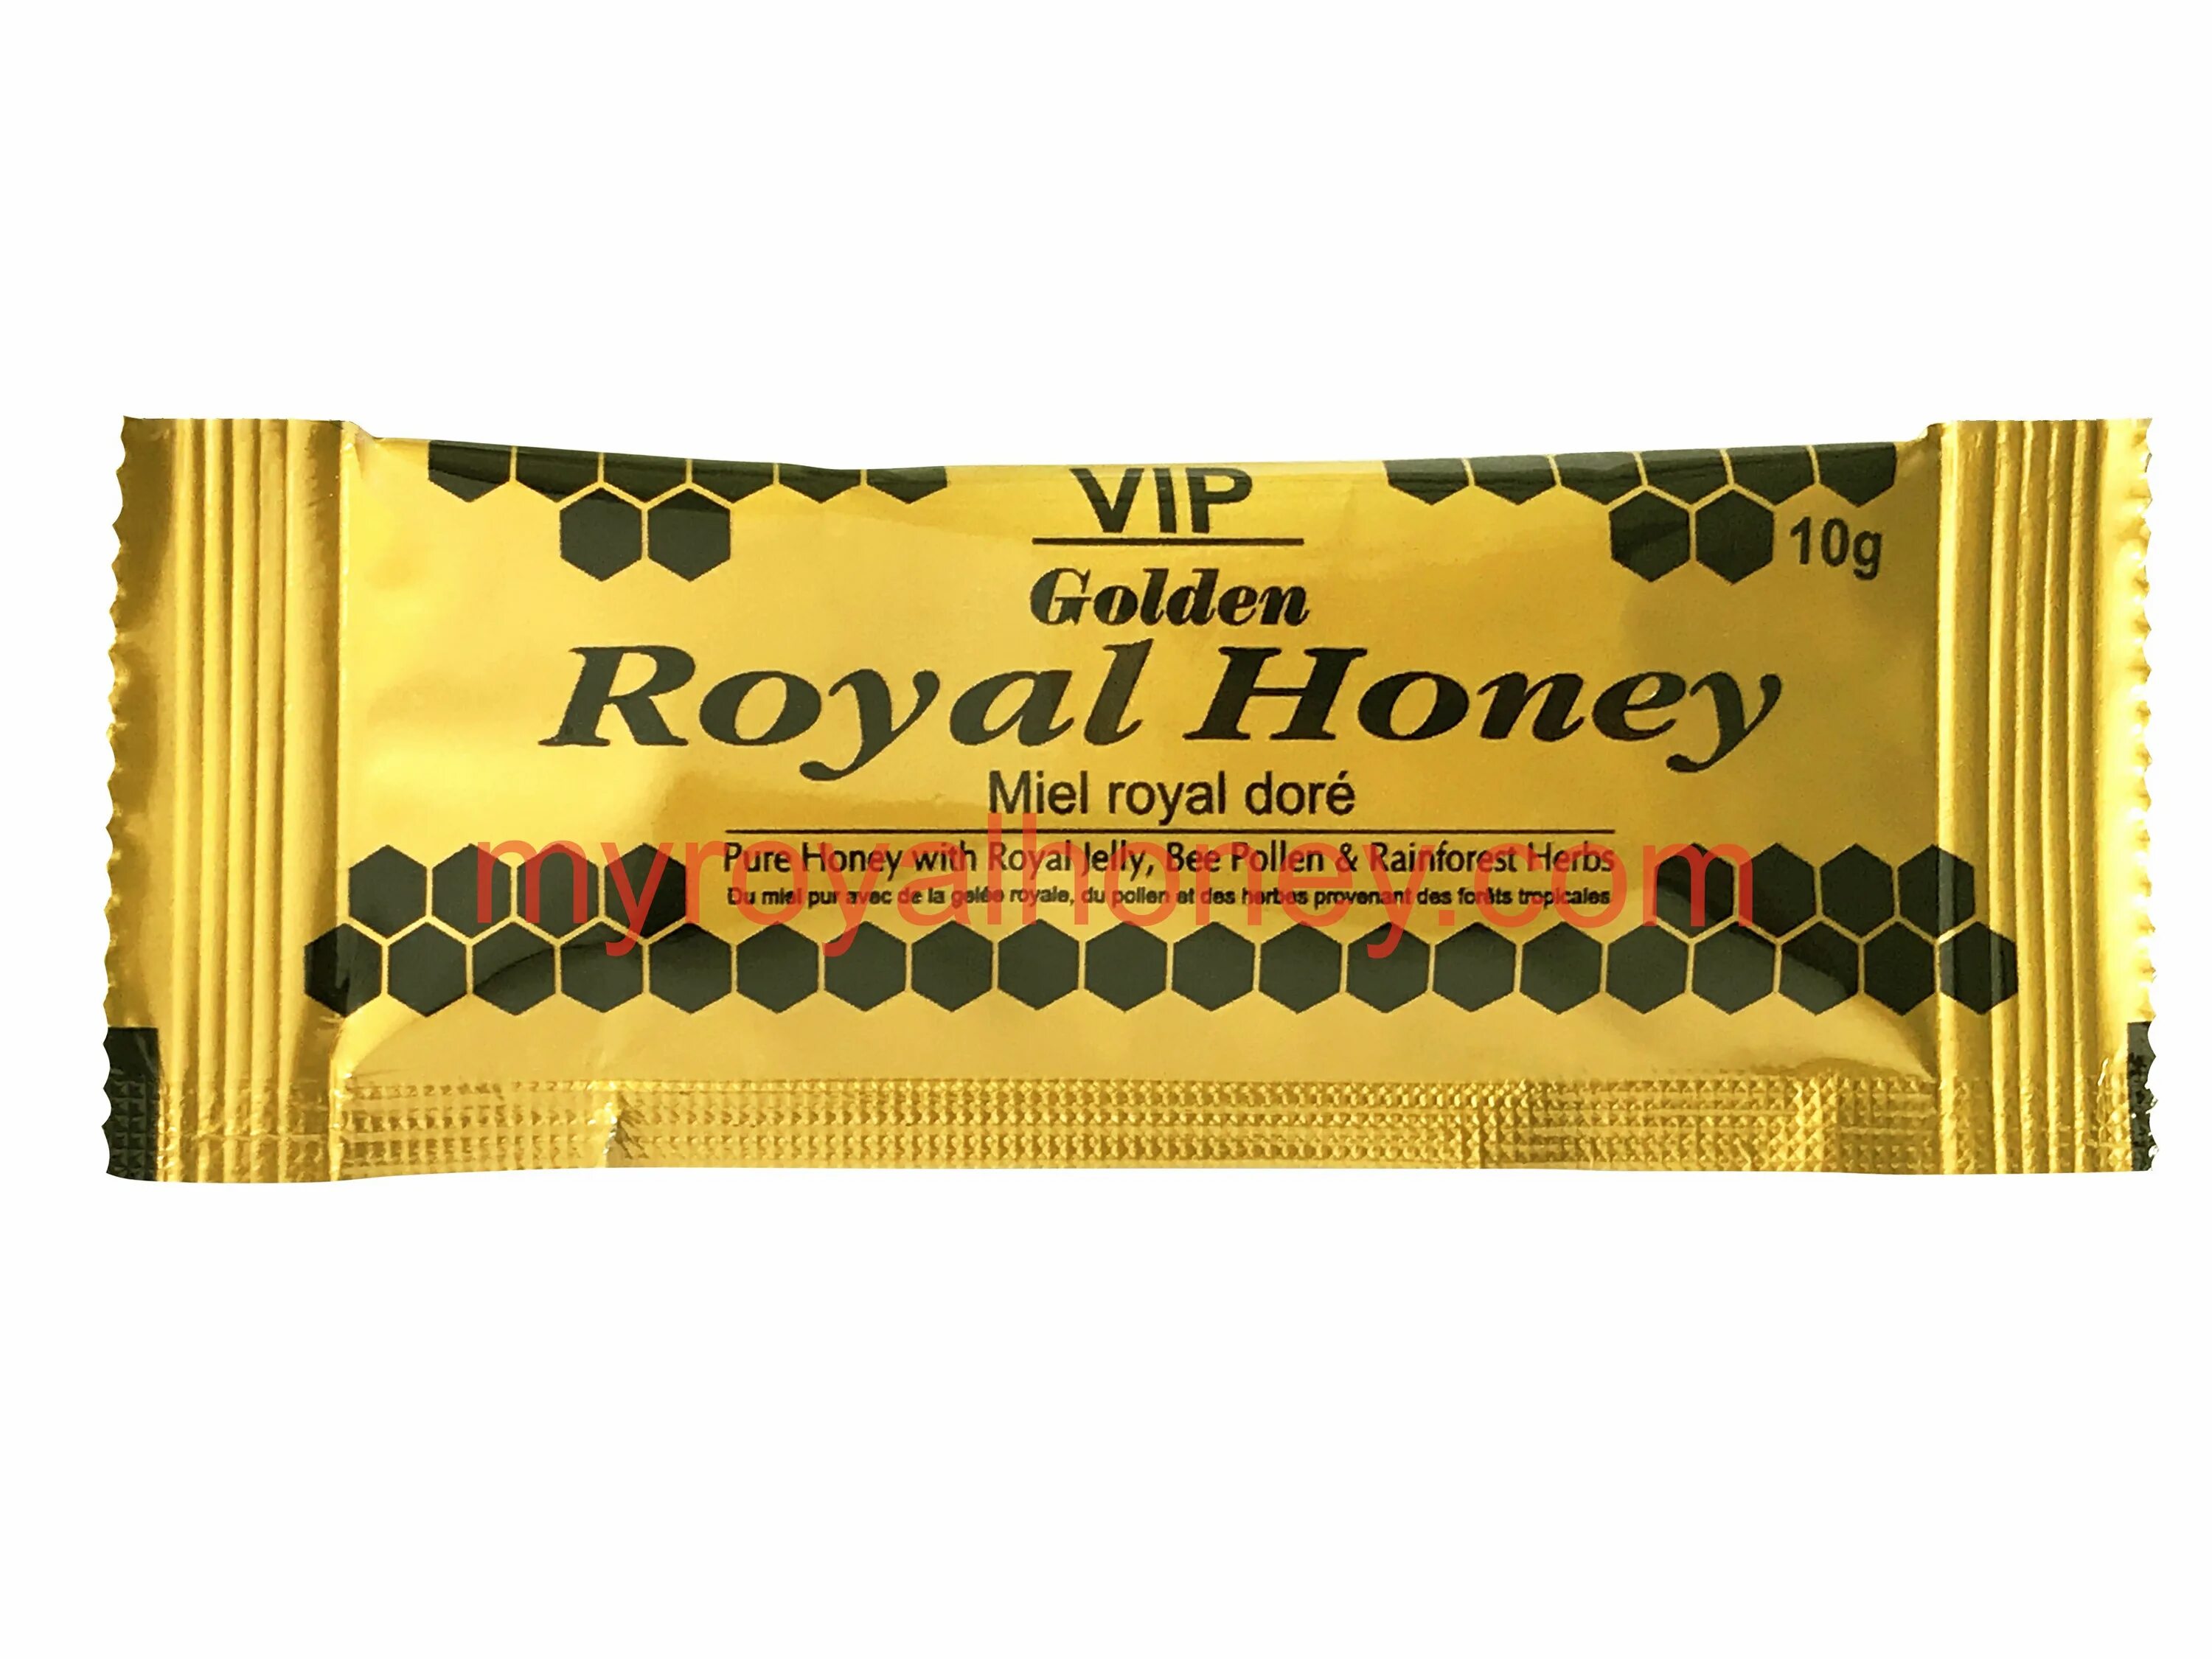 Королевский мёд Royal Honey. Royal Honey VIP Gold. Honey Royal Золотая. Коробка Royal Honey. Royal honey